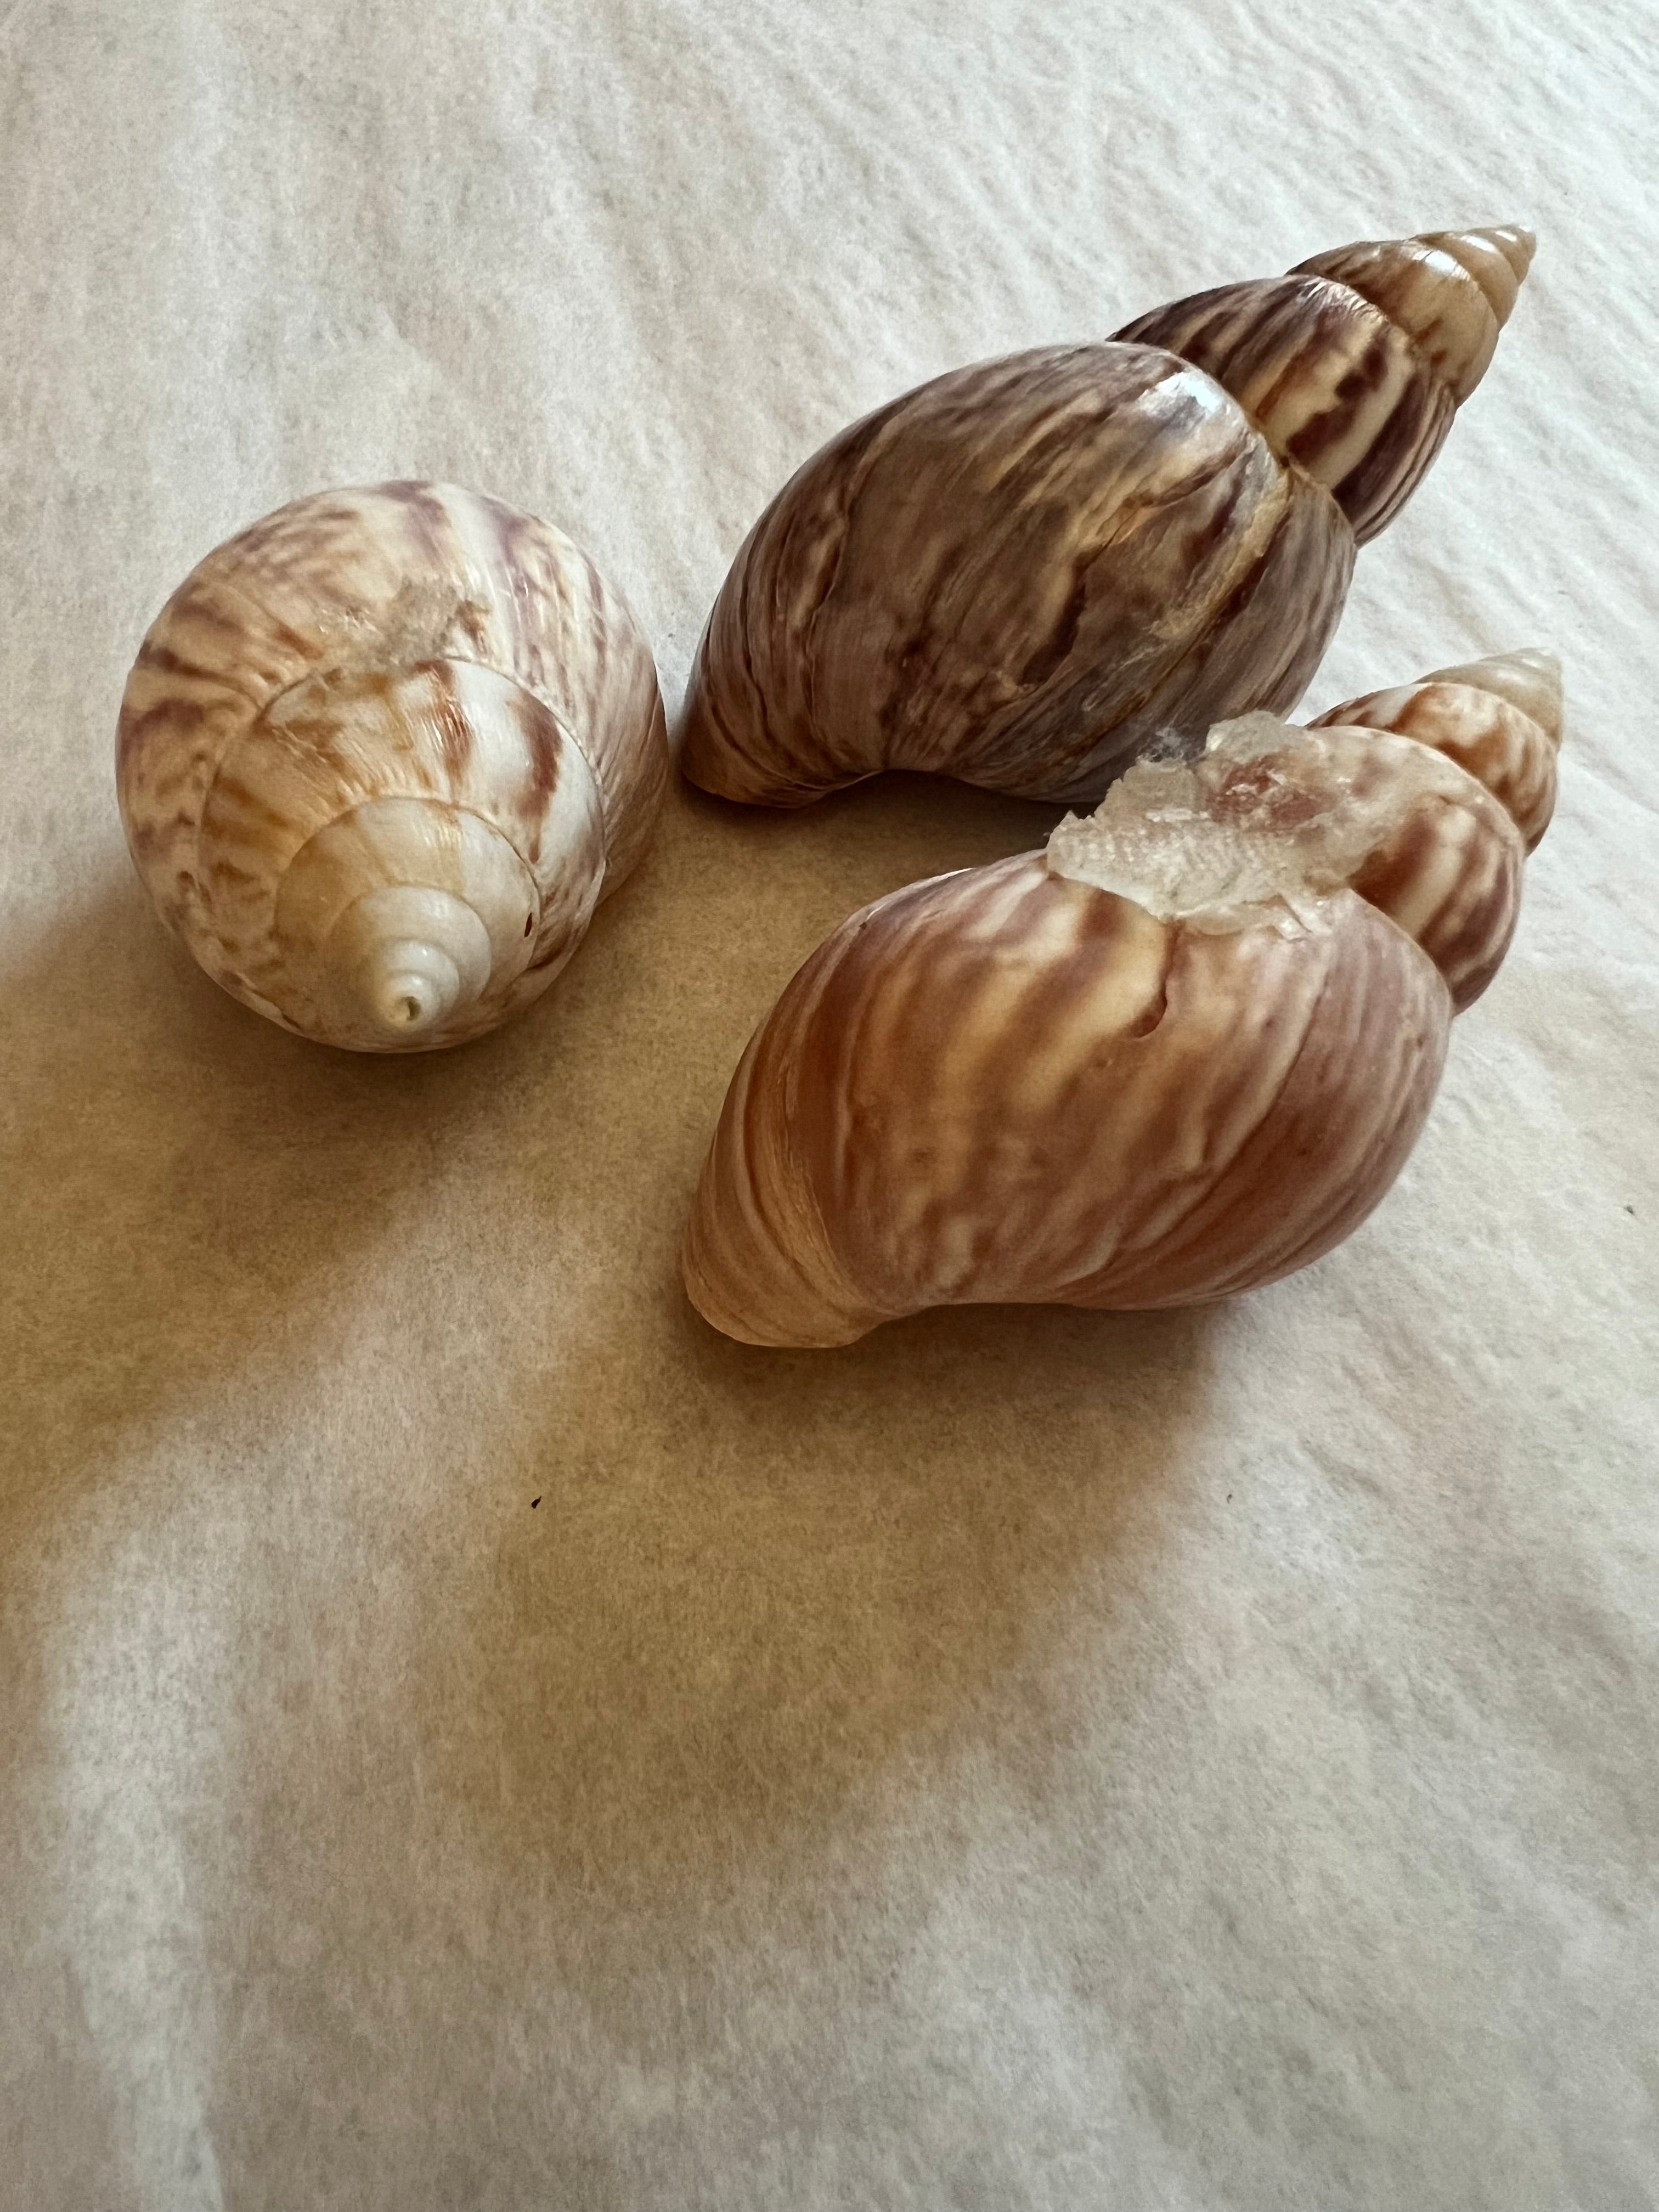 5pcs Giant Long Snail Shells, Snail Shell, Loose, Shells for